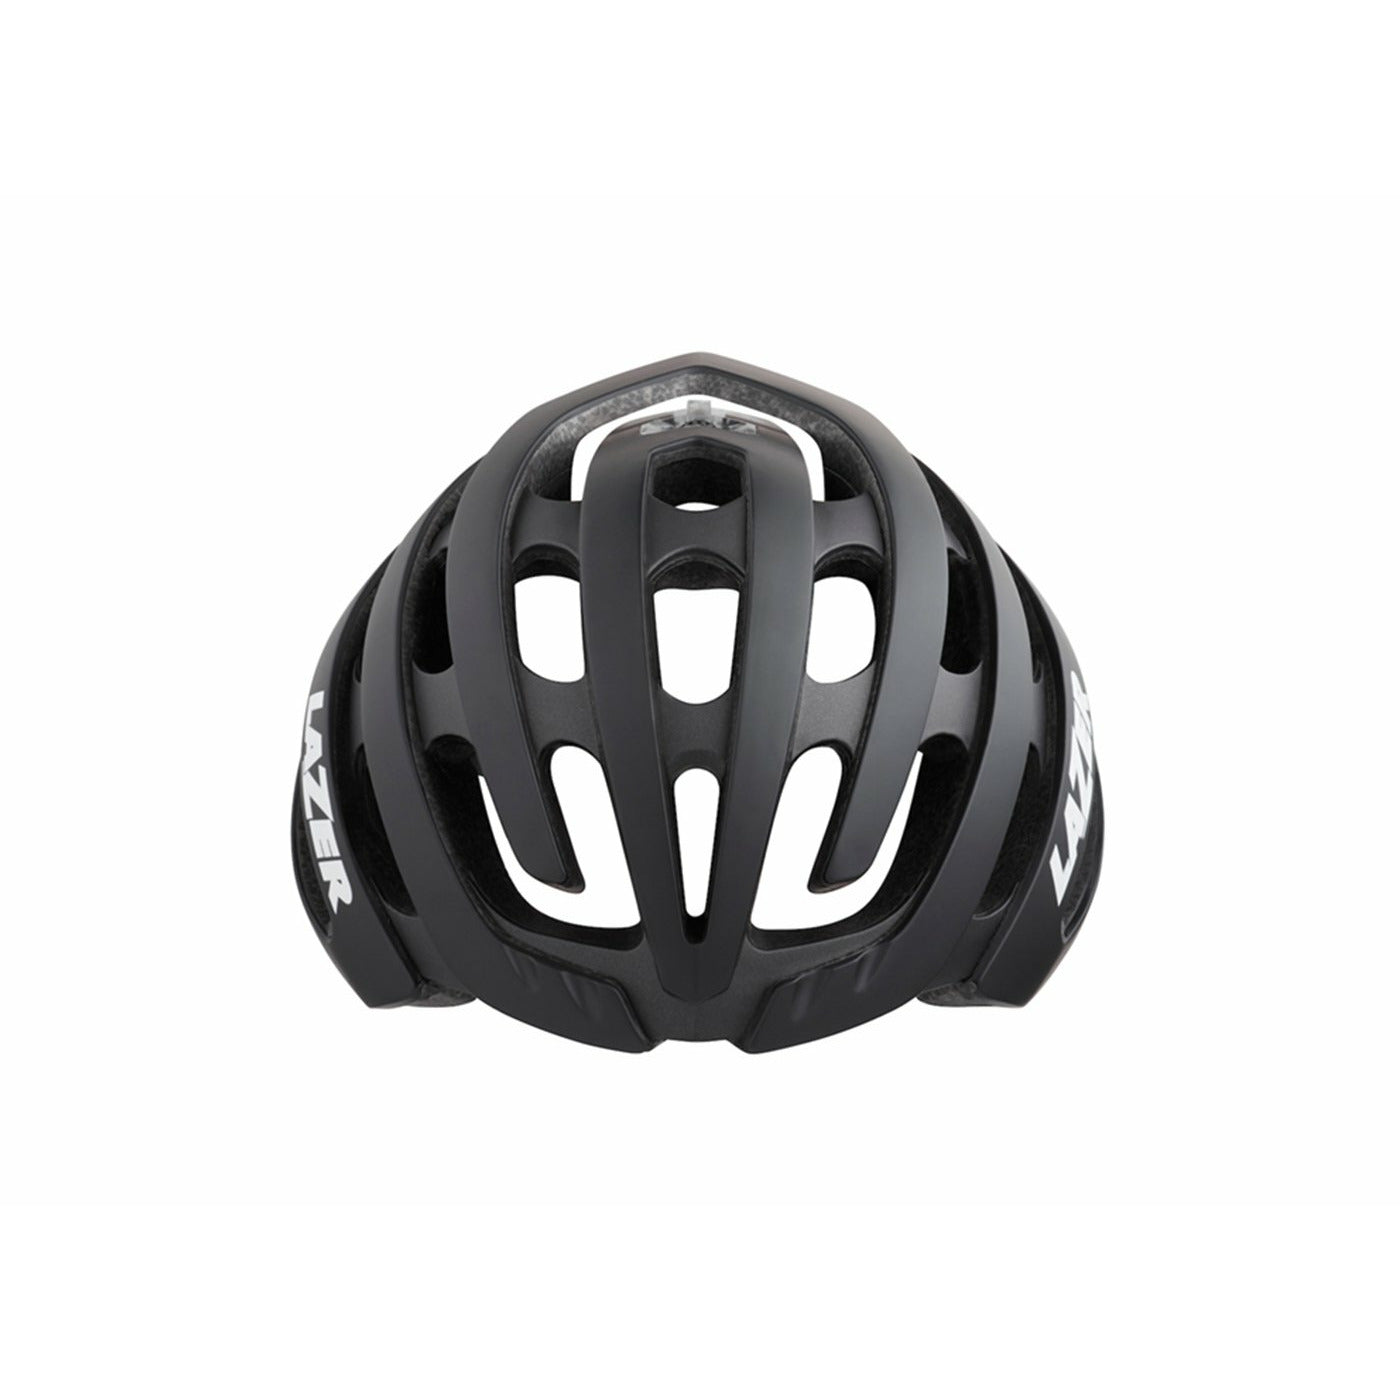 Lazer Road Bike Helmet from Mack in – Cycle & Fitness